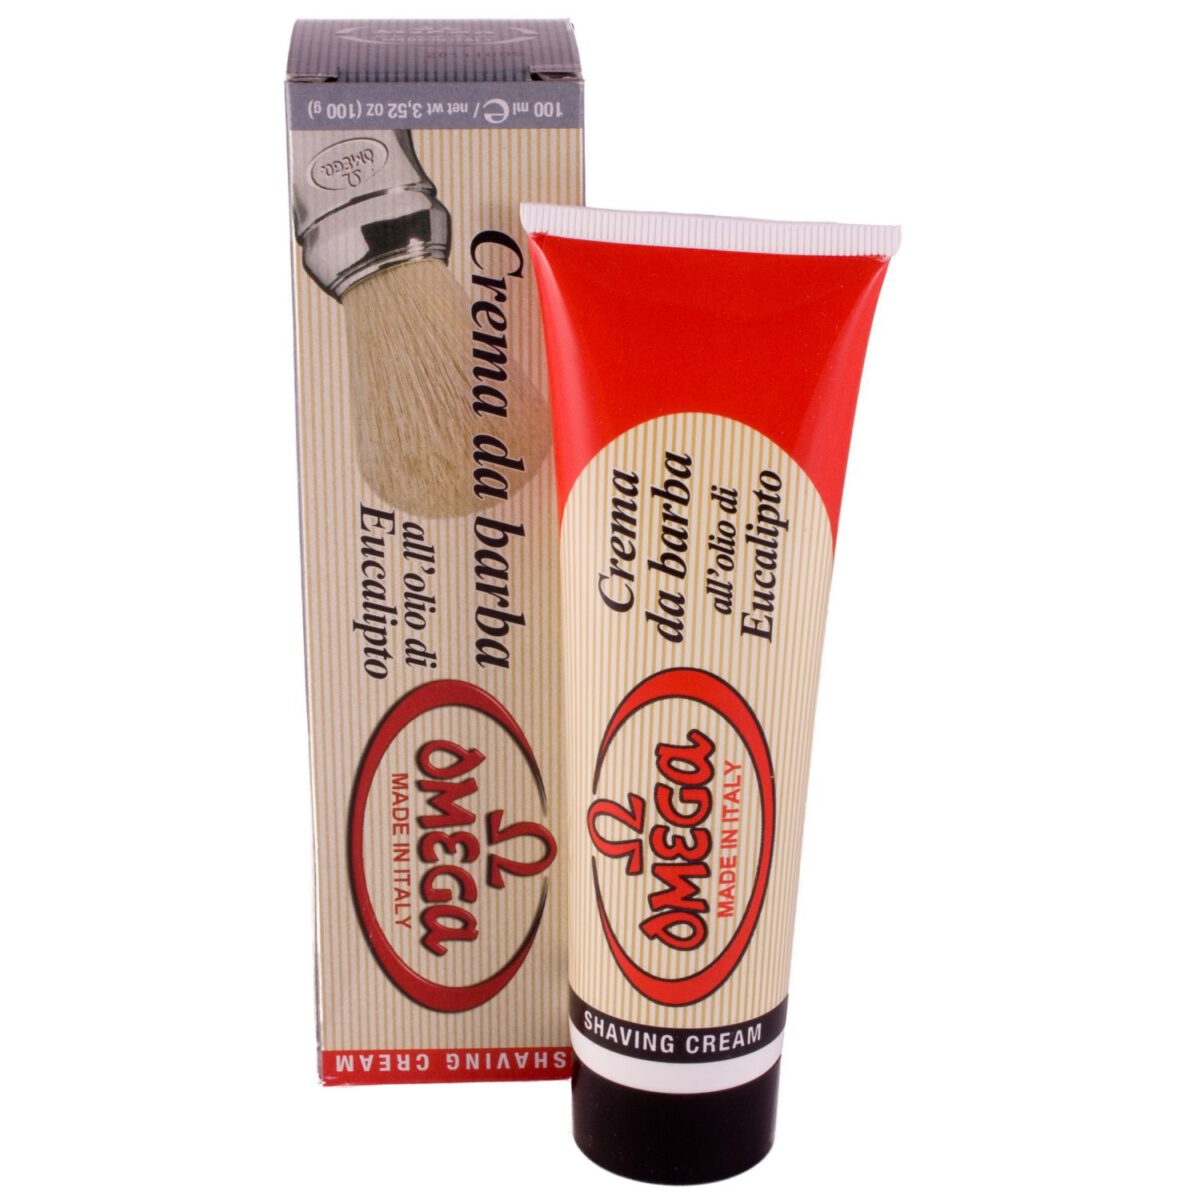 Omega traditional shaving cream